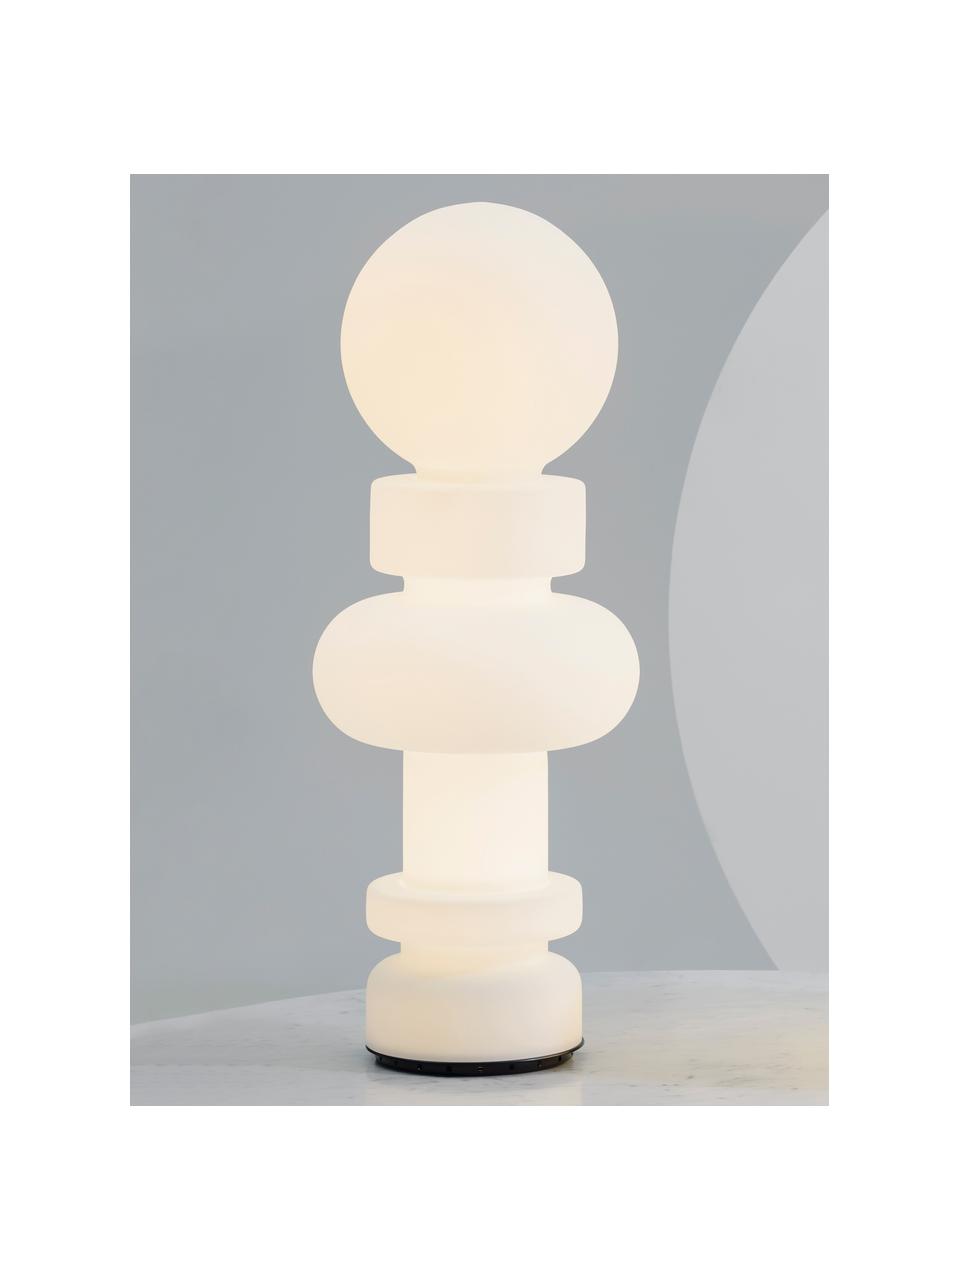 Kleine LED vloerlamp Re, handgemaakt, Lampenkap: glas, Wit, Ø 34 x H 89 cm